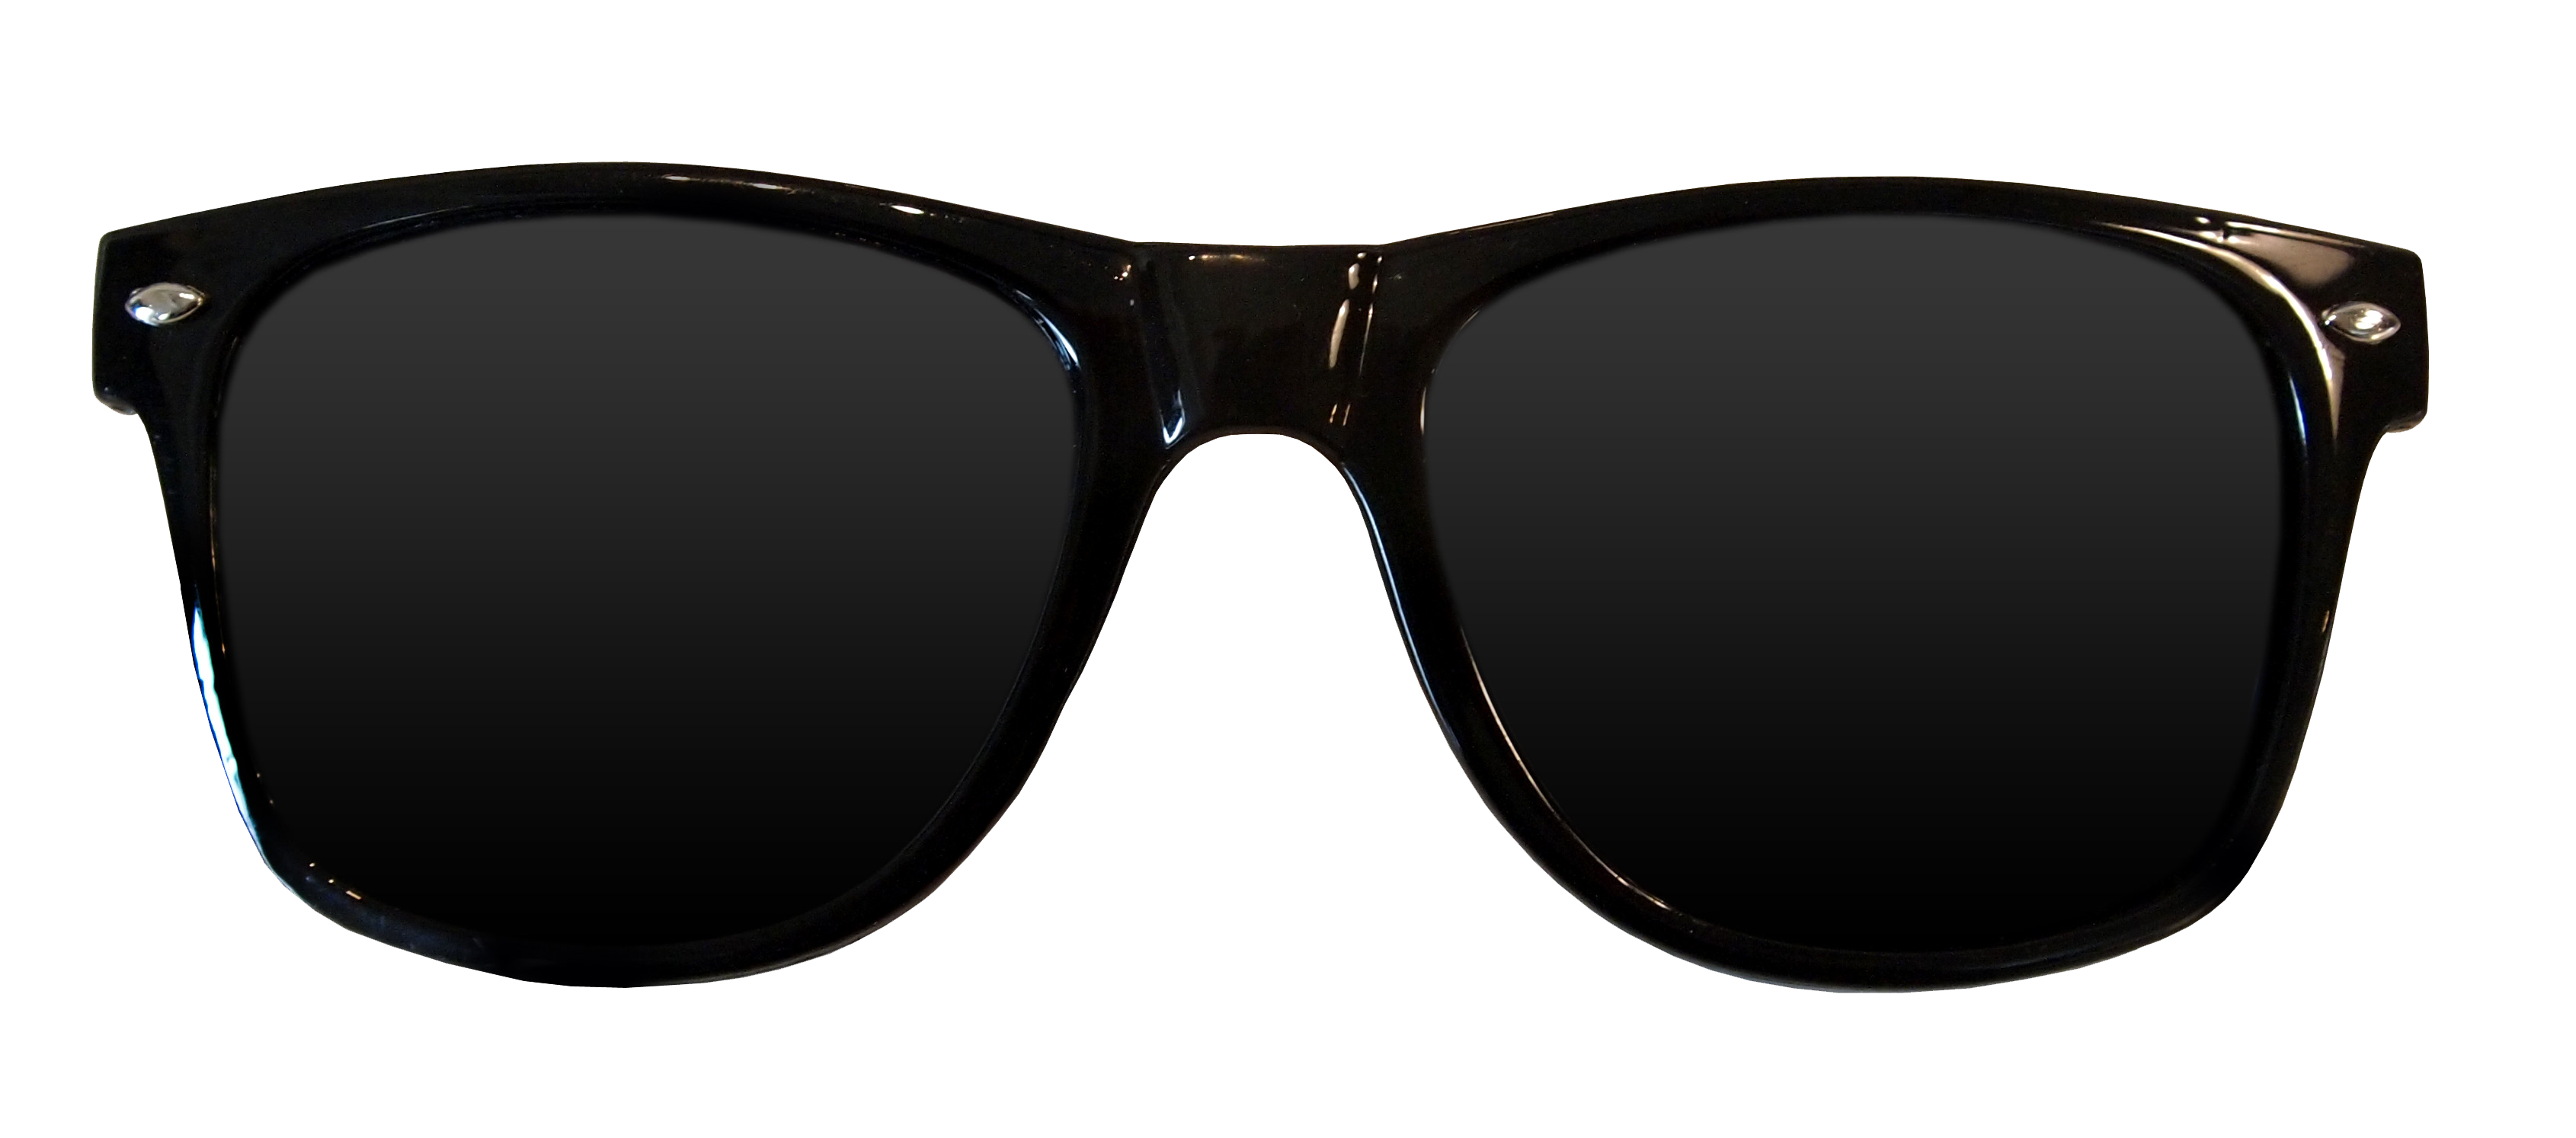 aviator sunglasses vector